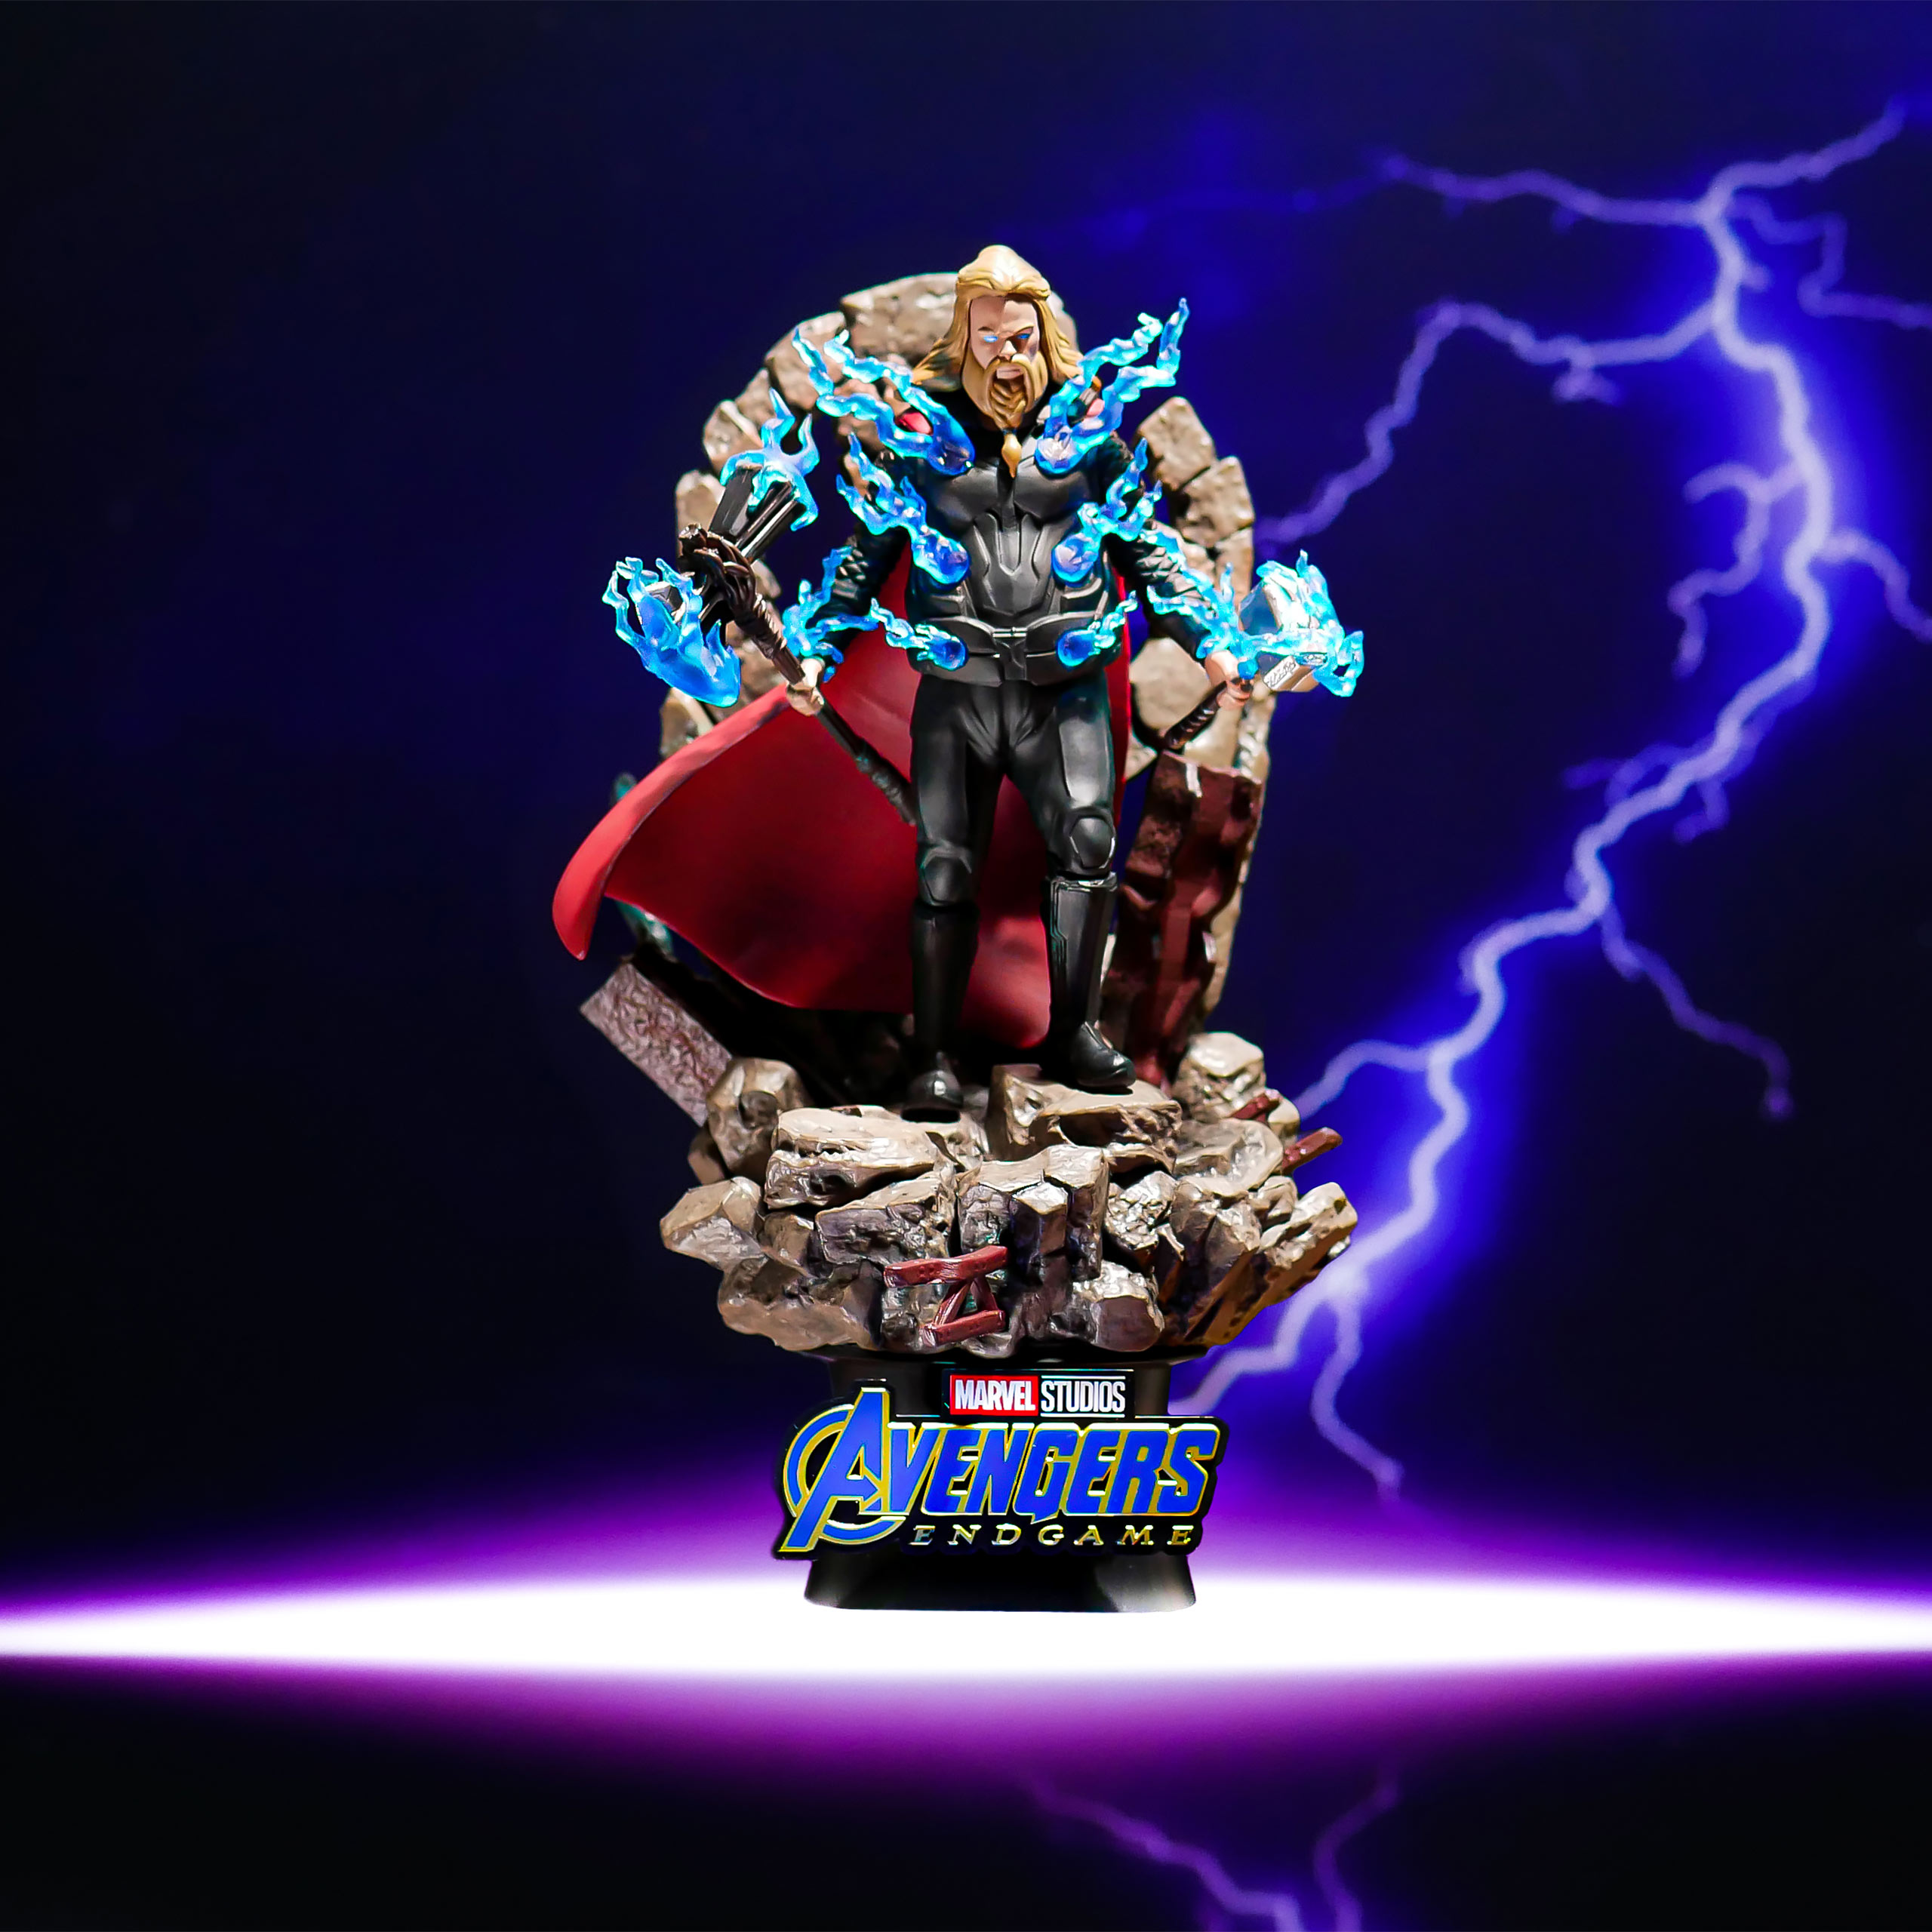 Avengers Endgame - Thor Diorama Figur